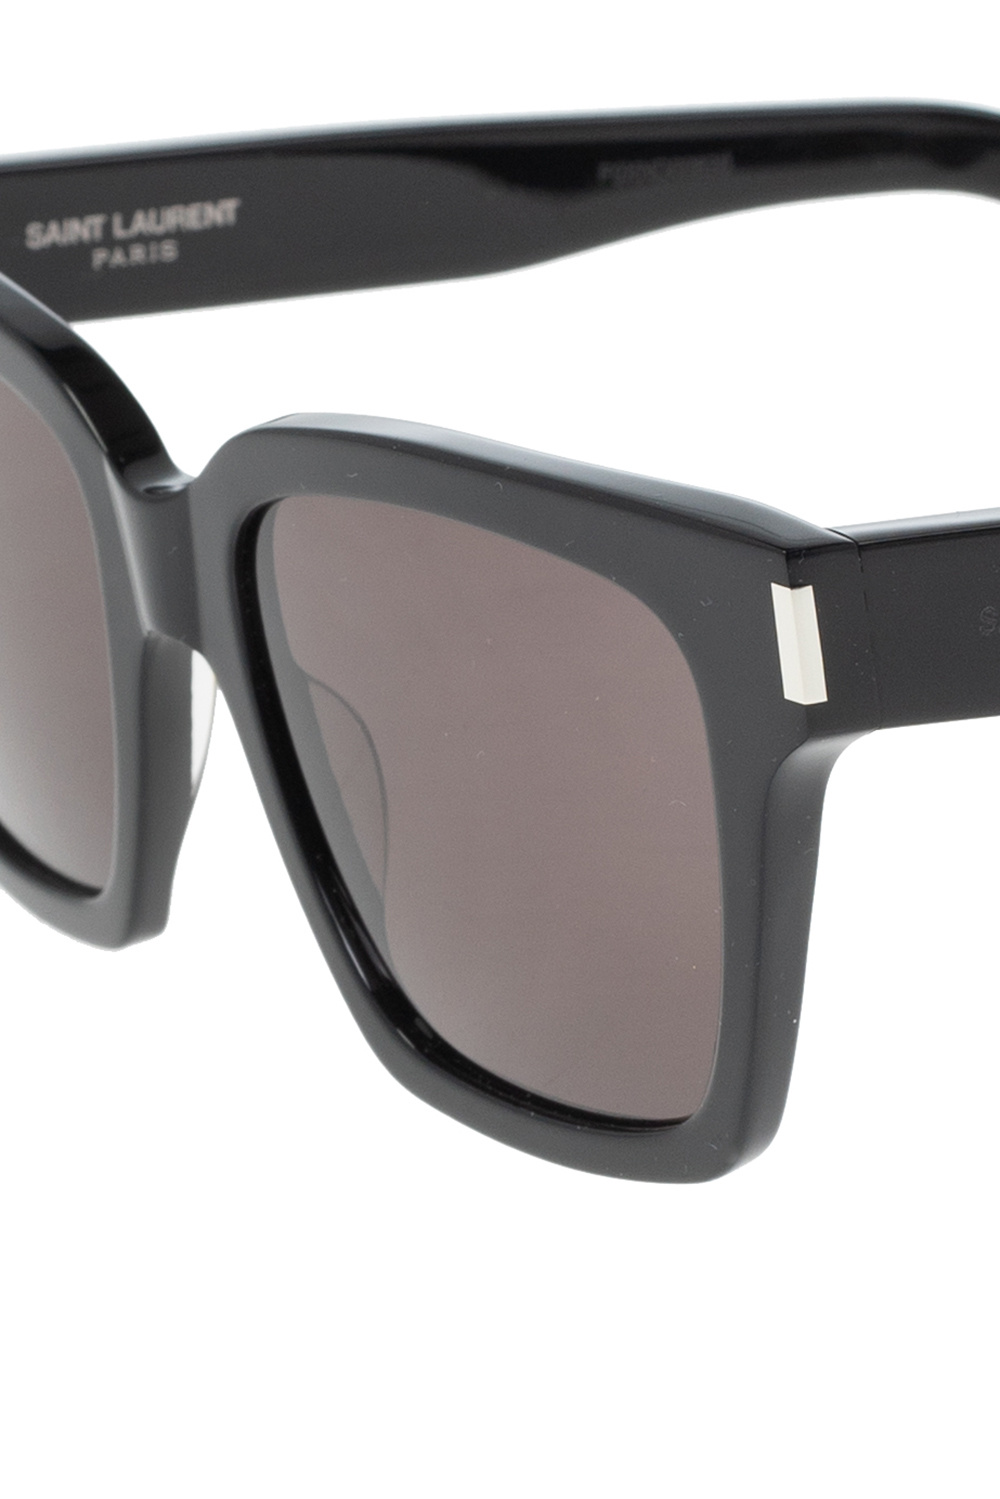 Saint Laurent ‘SL 507’ sunglasses